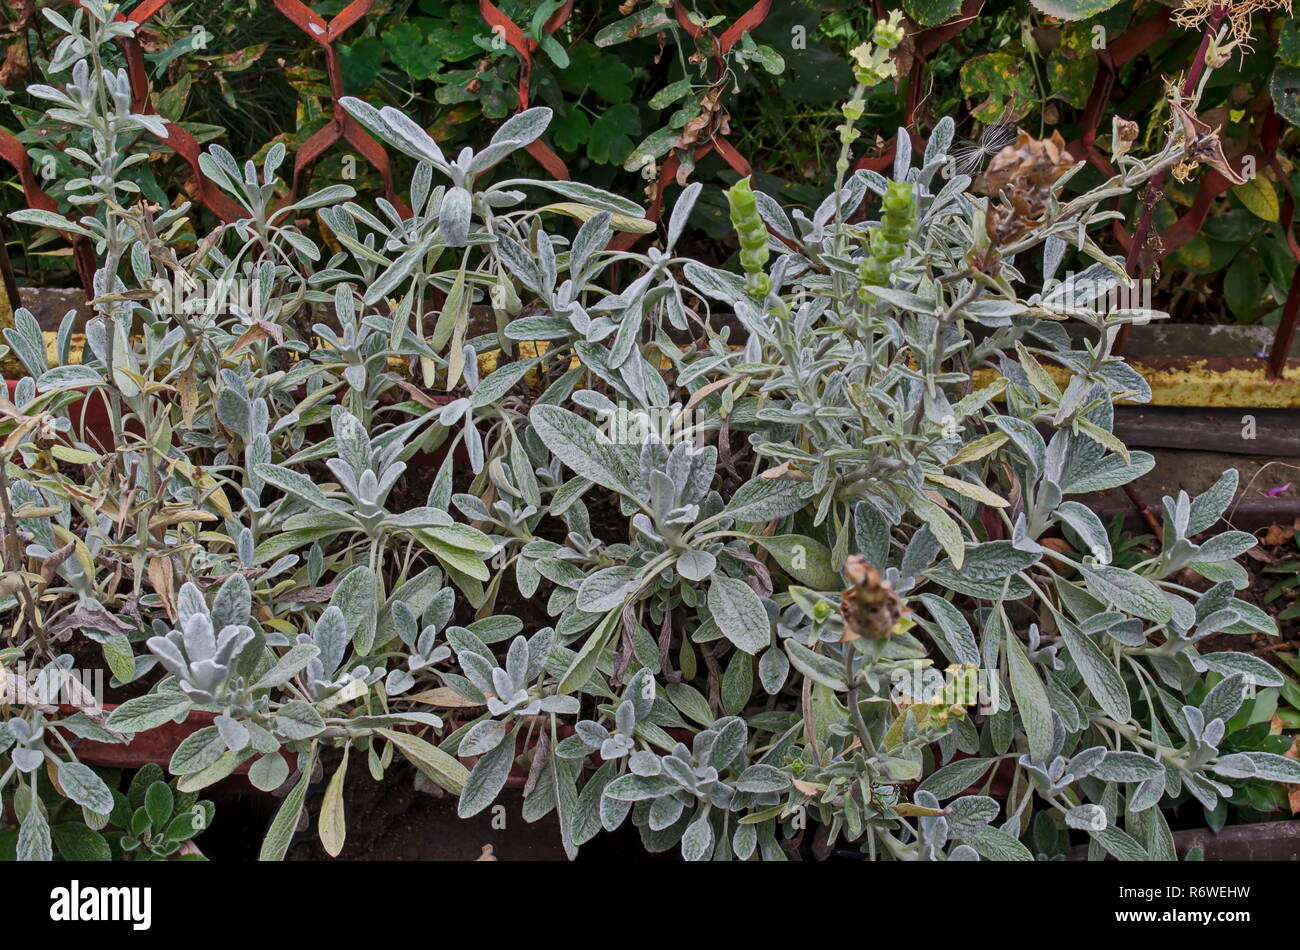 Summer view of herb Sideritis Scardica, mountain tea, growing in garden at mountain town Delchevo, Macedonia, Europe Stock Photo